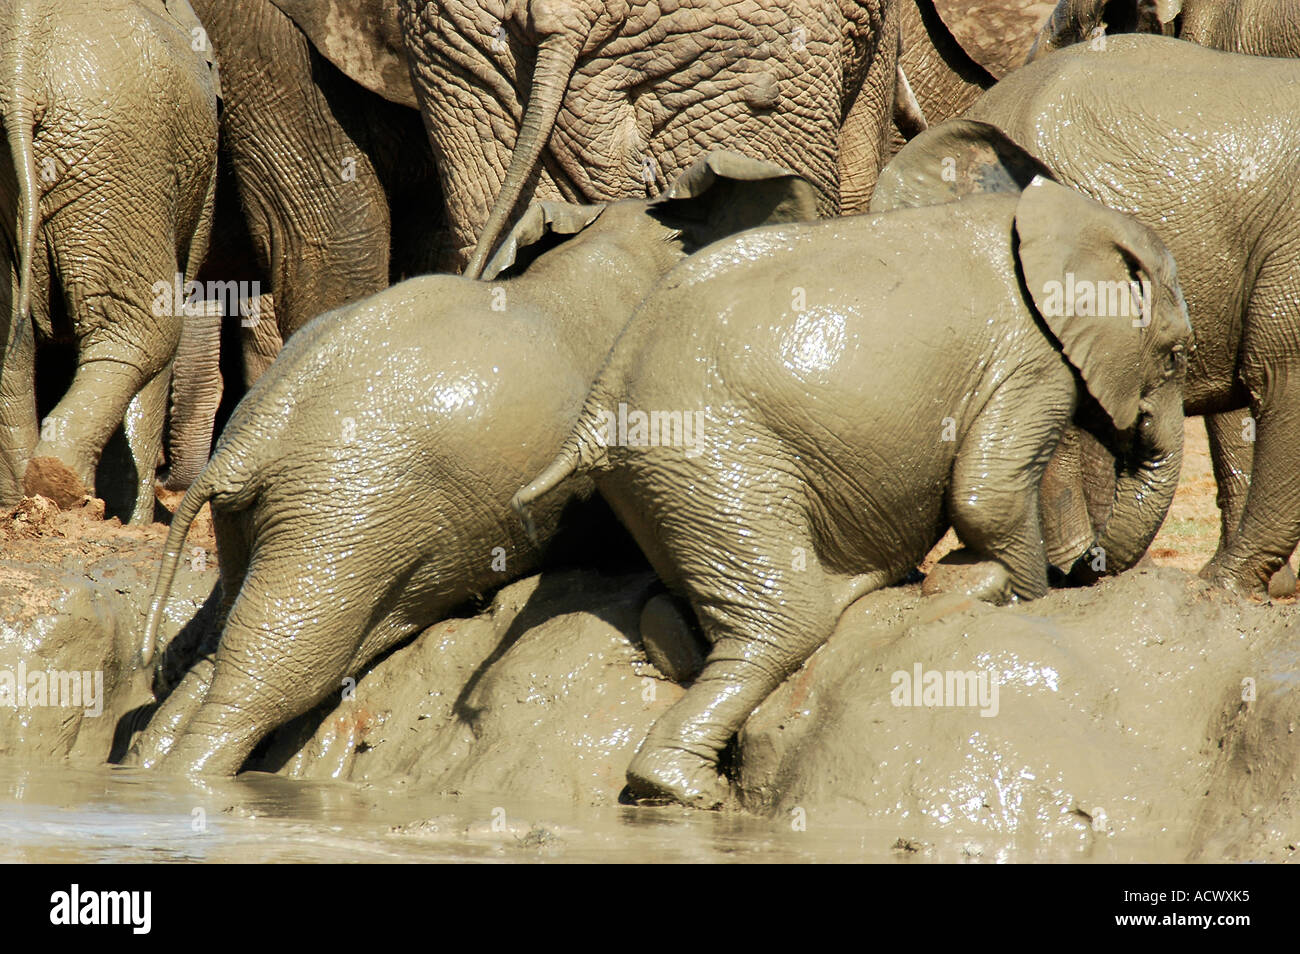 Mudbath at Addo elephant park Stock Photo